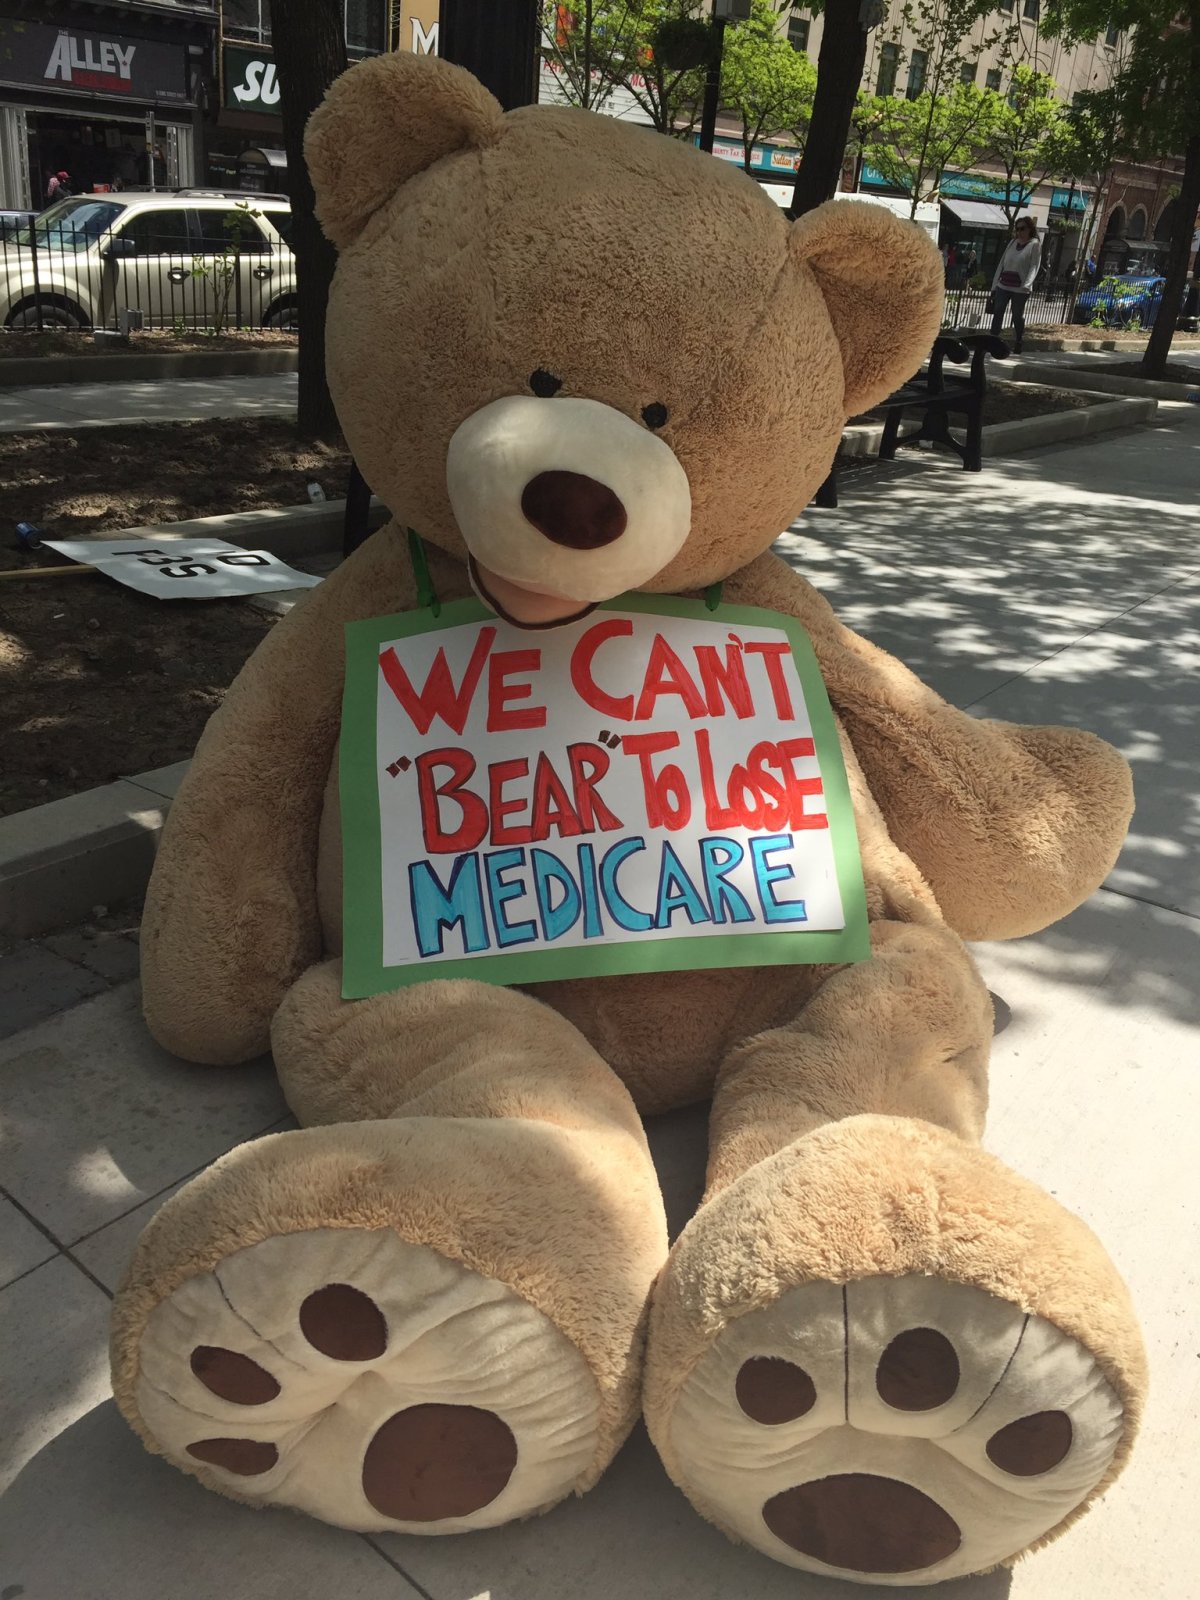 Ontario Health coalition brings giant teddy bear on Medicare tour.